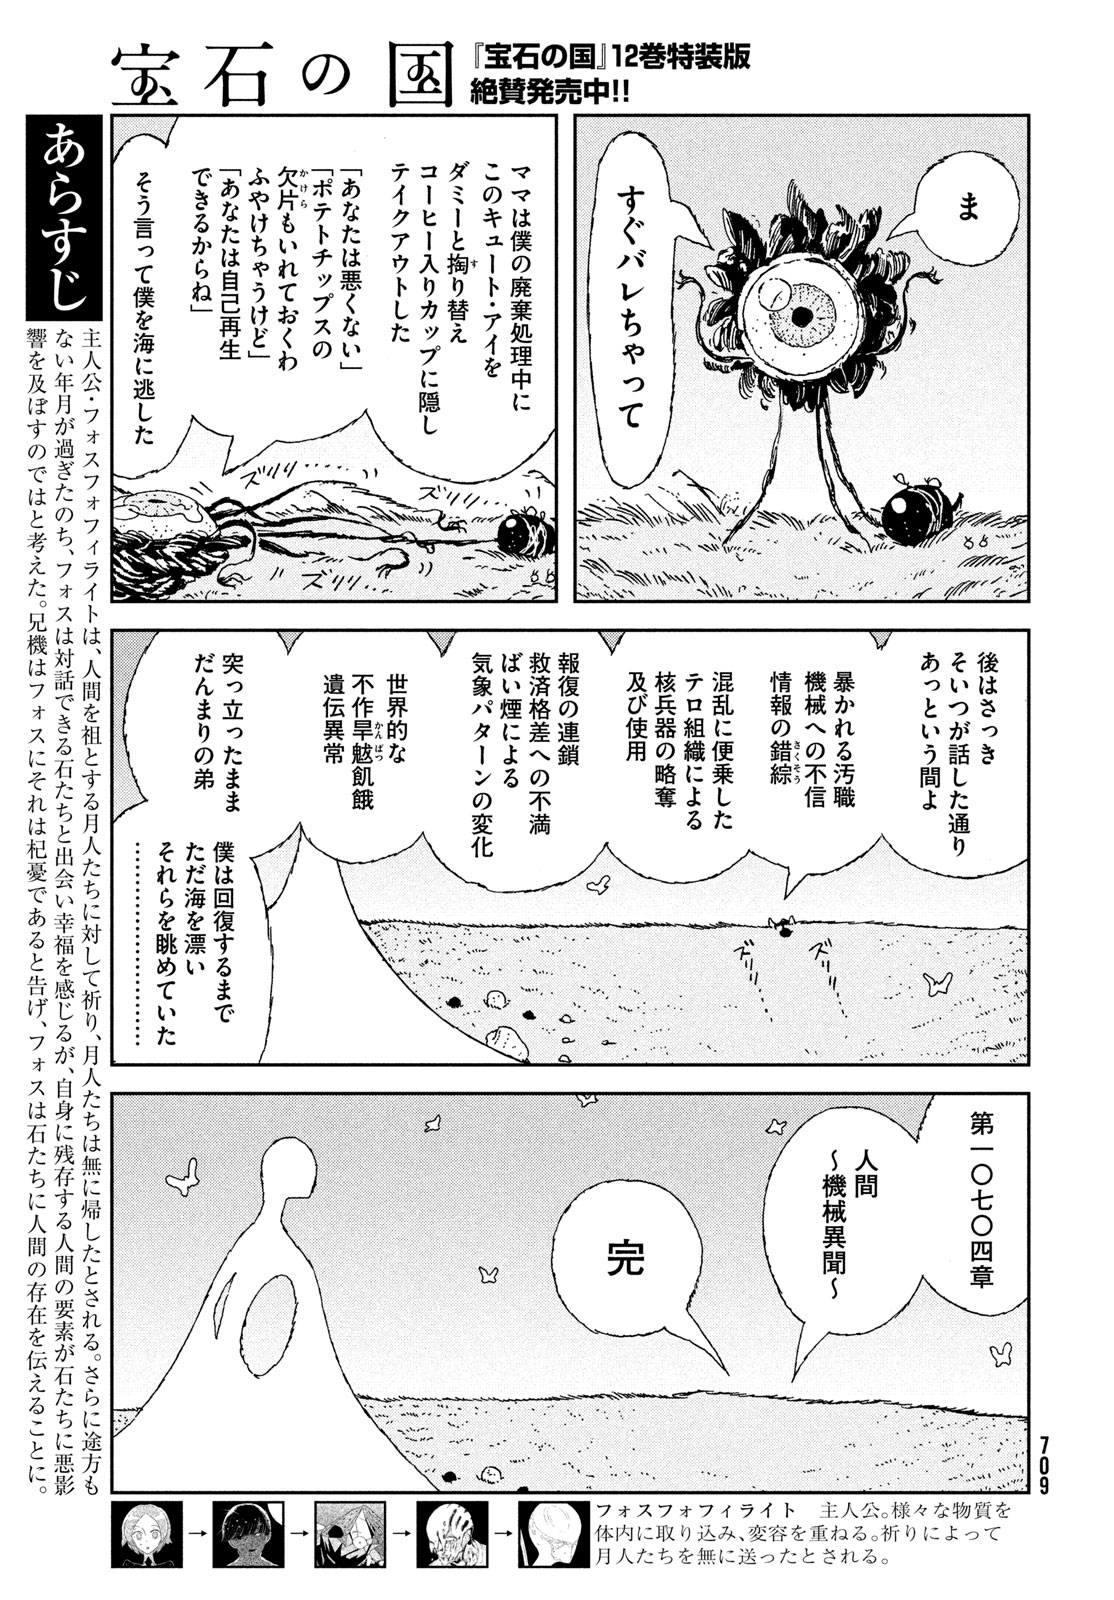 Houseki no Kuni - Chapter 104 - Page 3